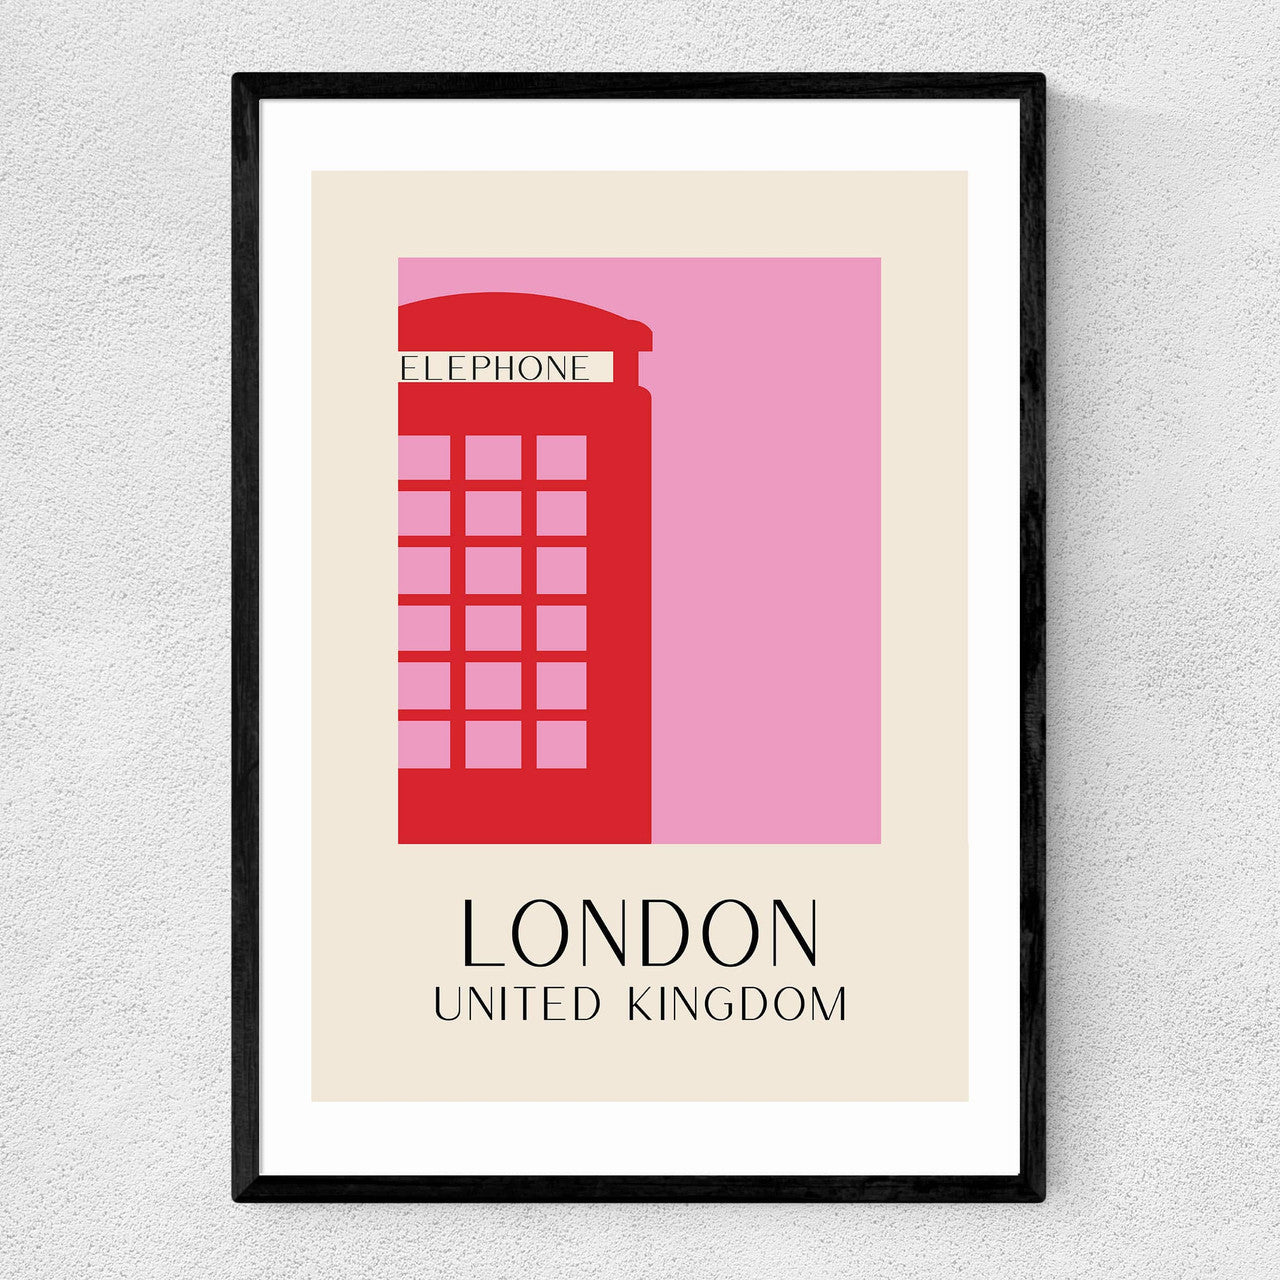 London Telephone Box Print